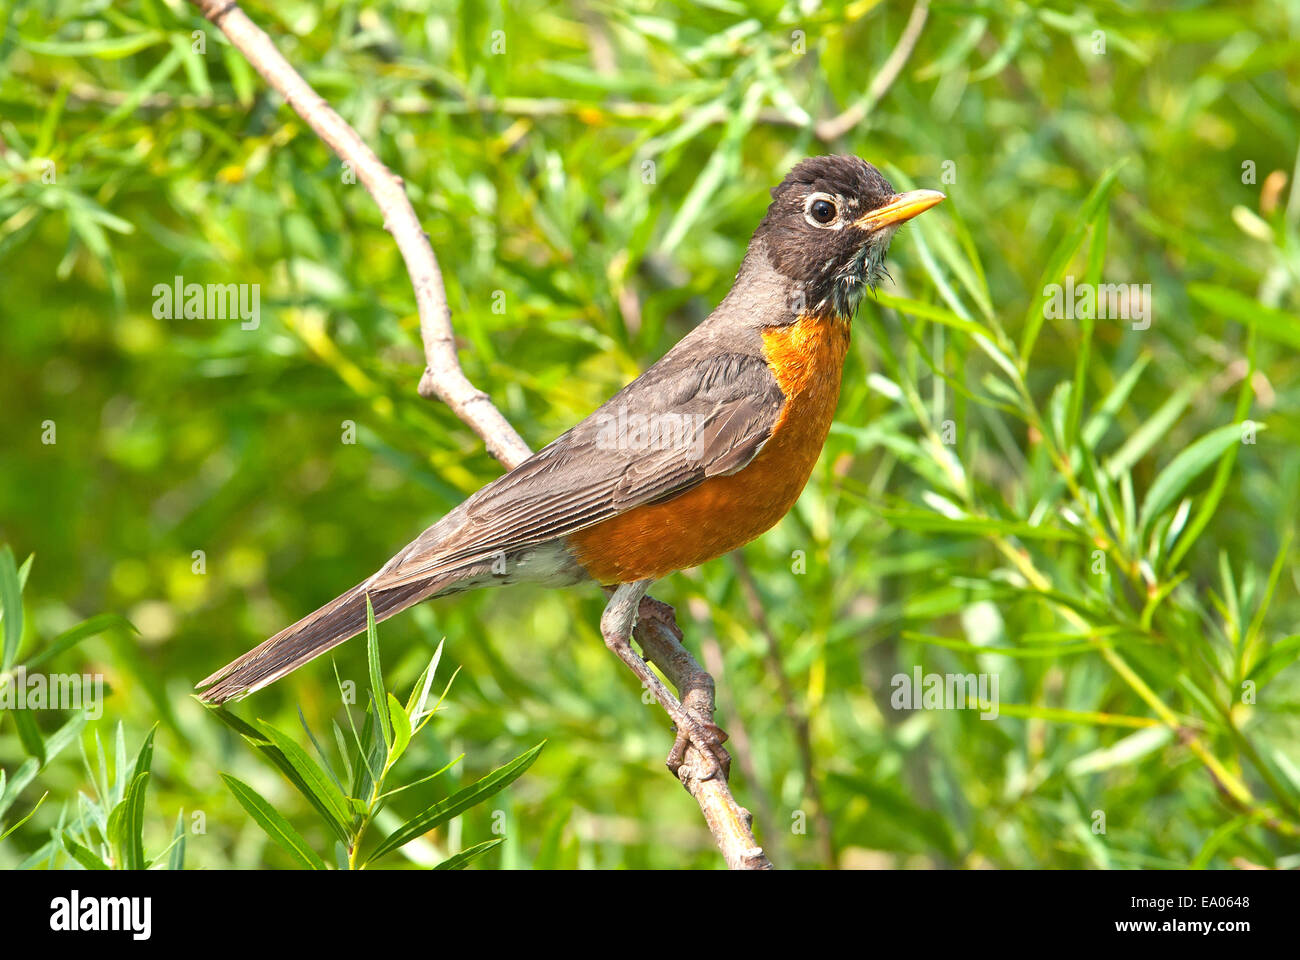 American Robin, Turdus migratorius, on branch Stock Photo